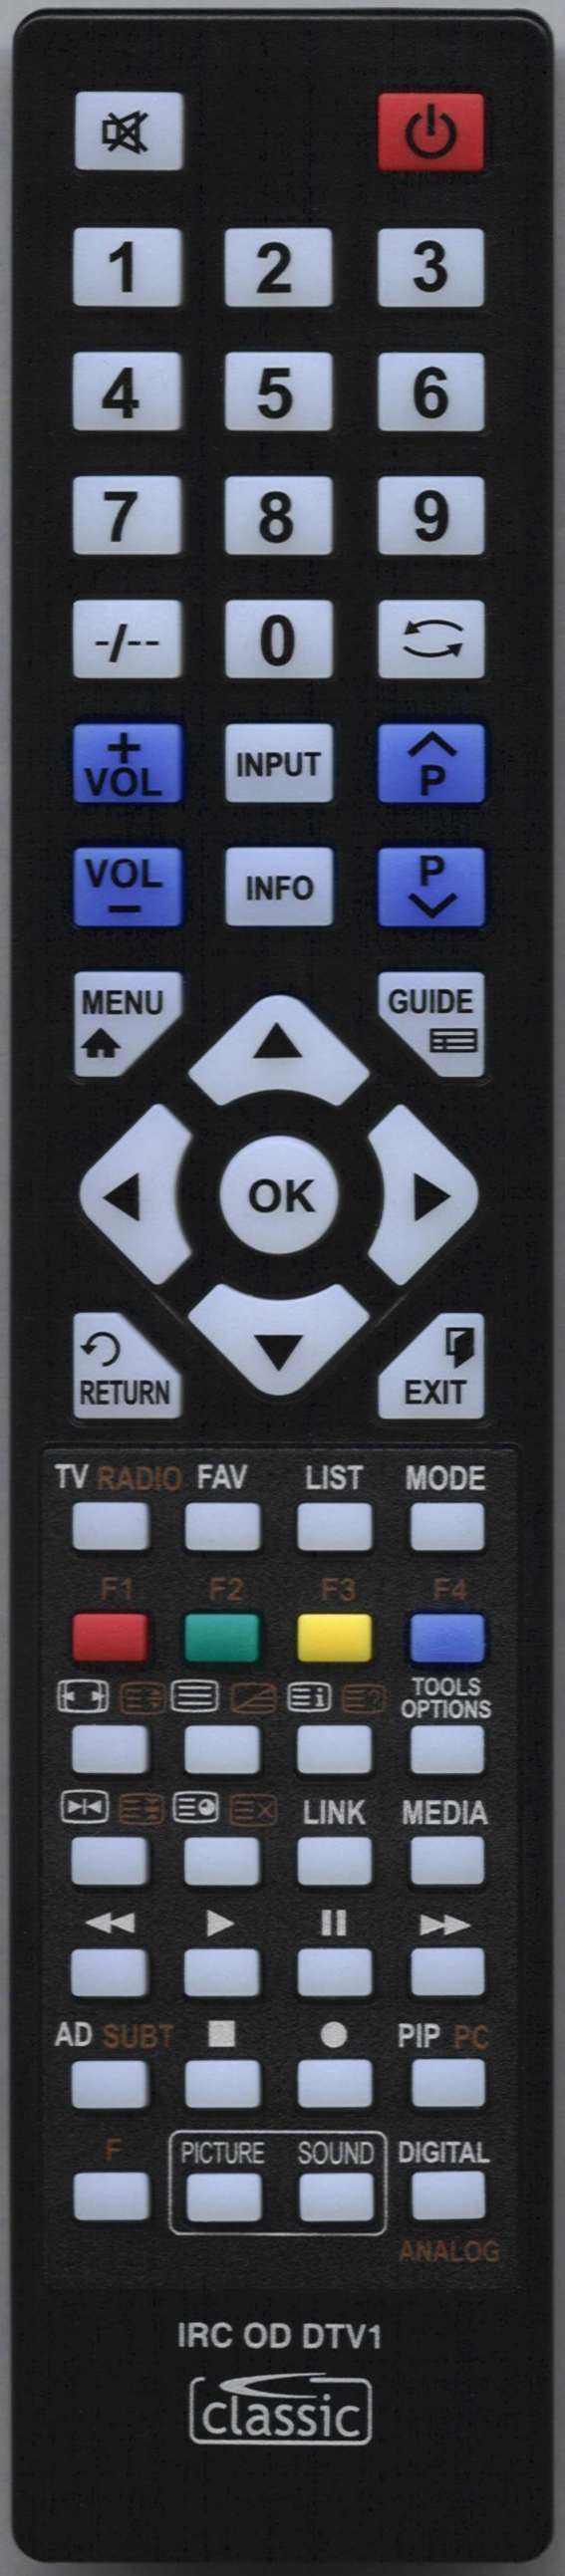 Orion TV-42 FX500D Remote Control